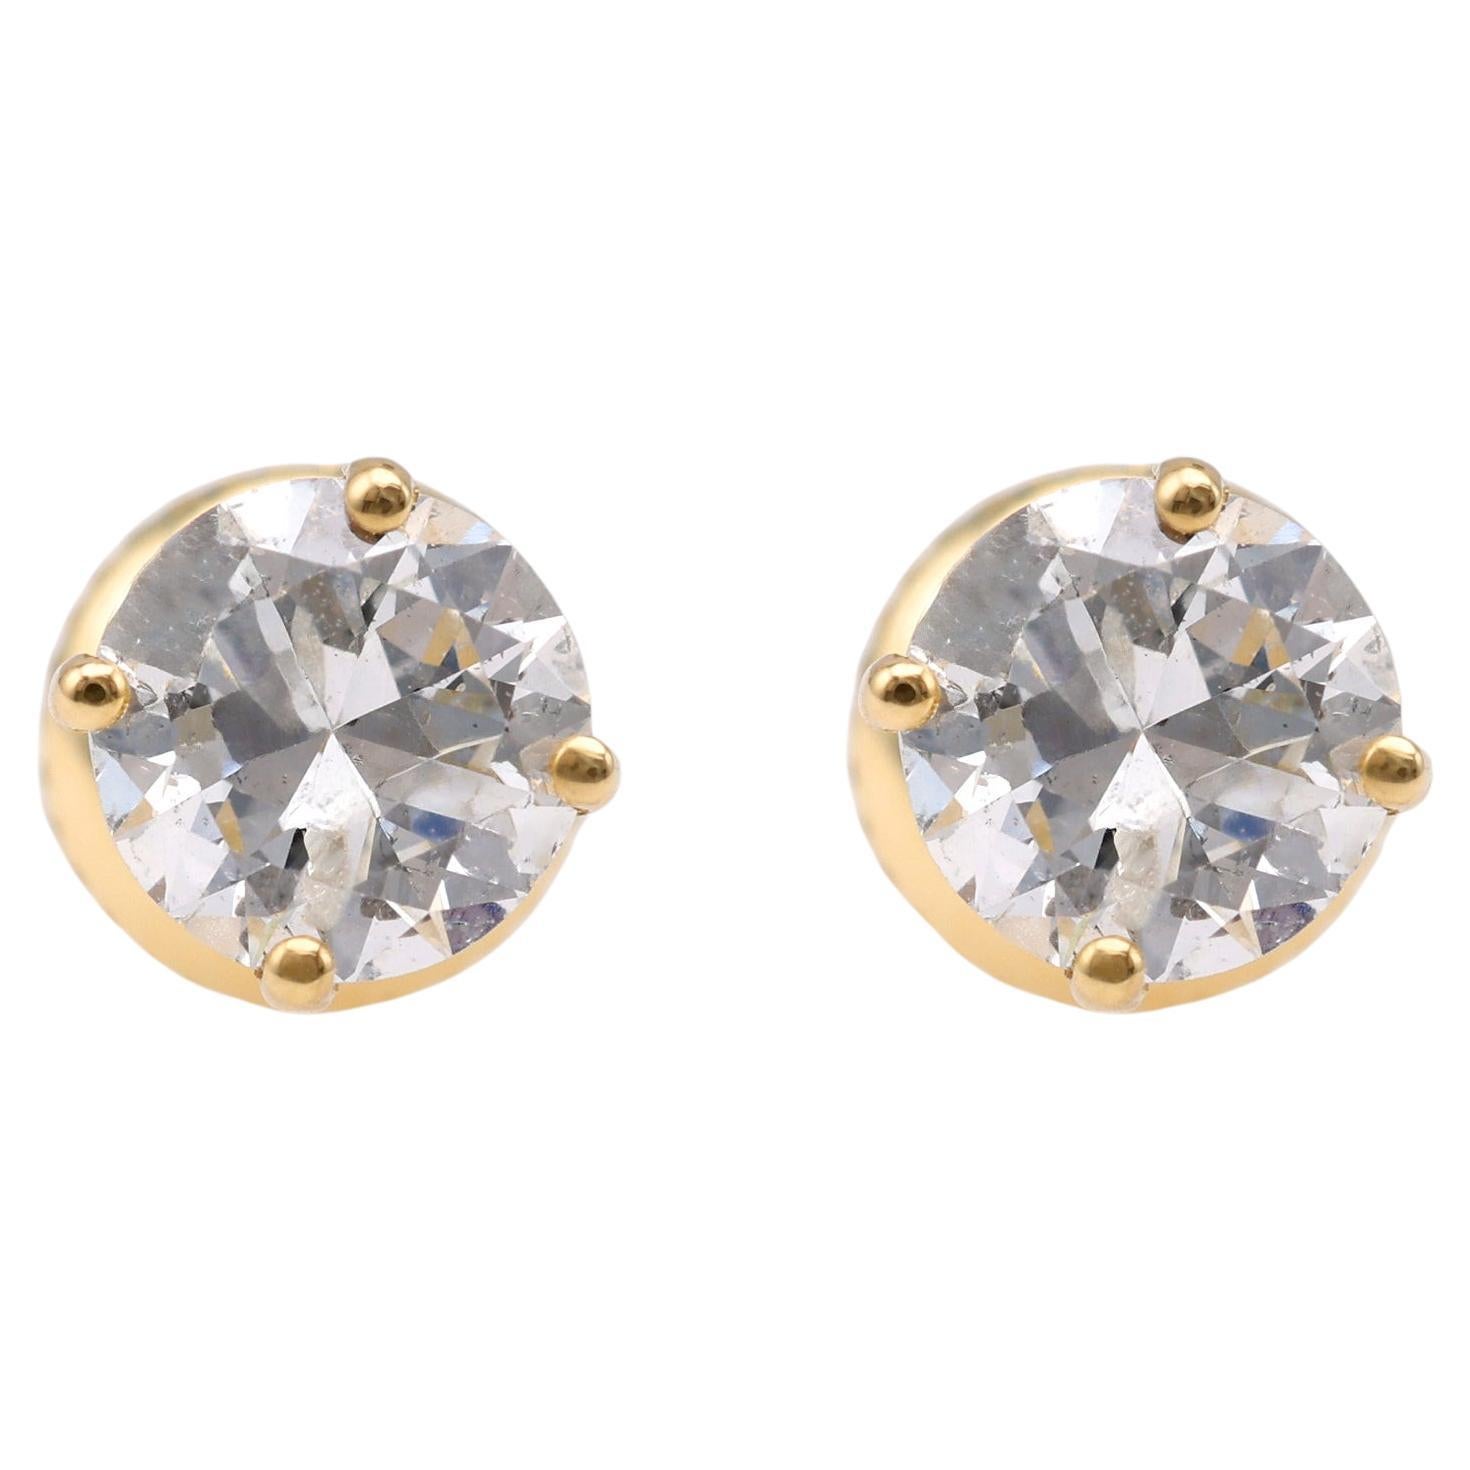 1.32 Carat Total Weight Diamond 18k Yellow Gold Stud Earrings